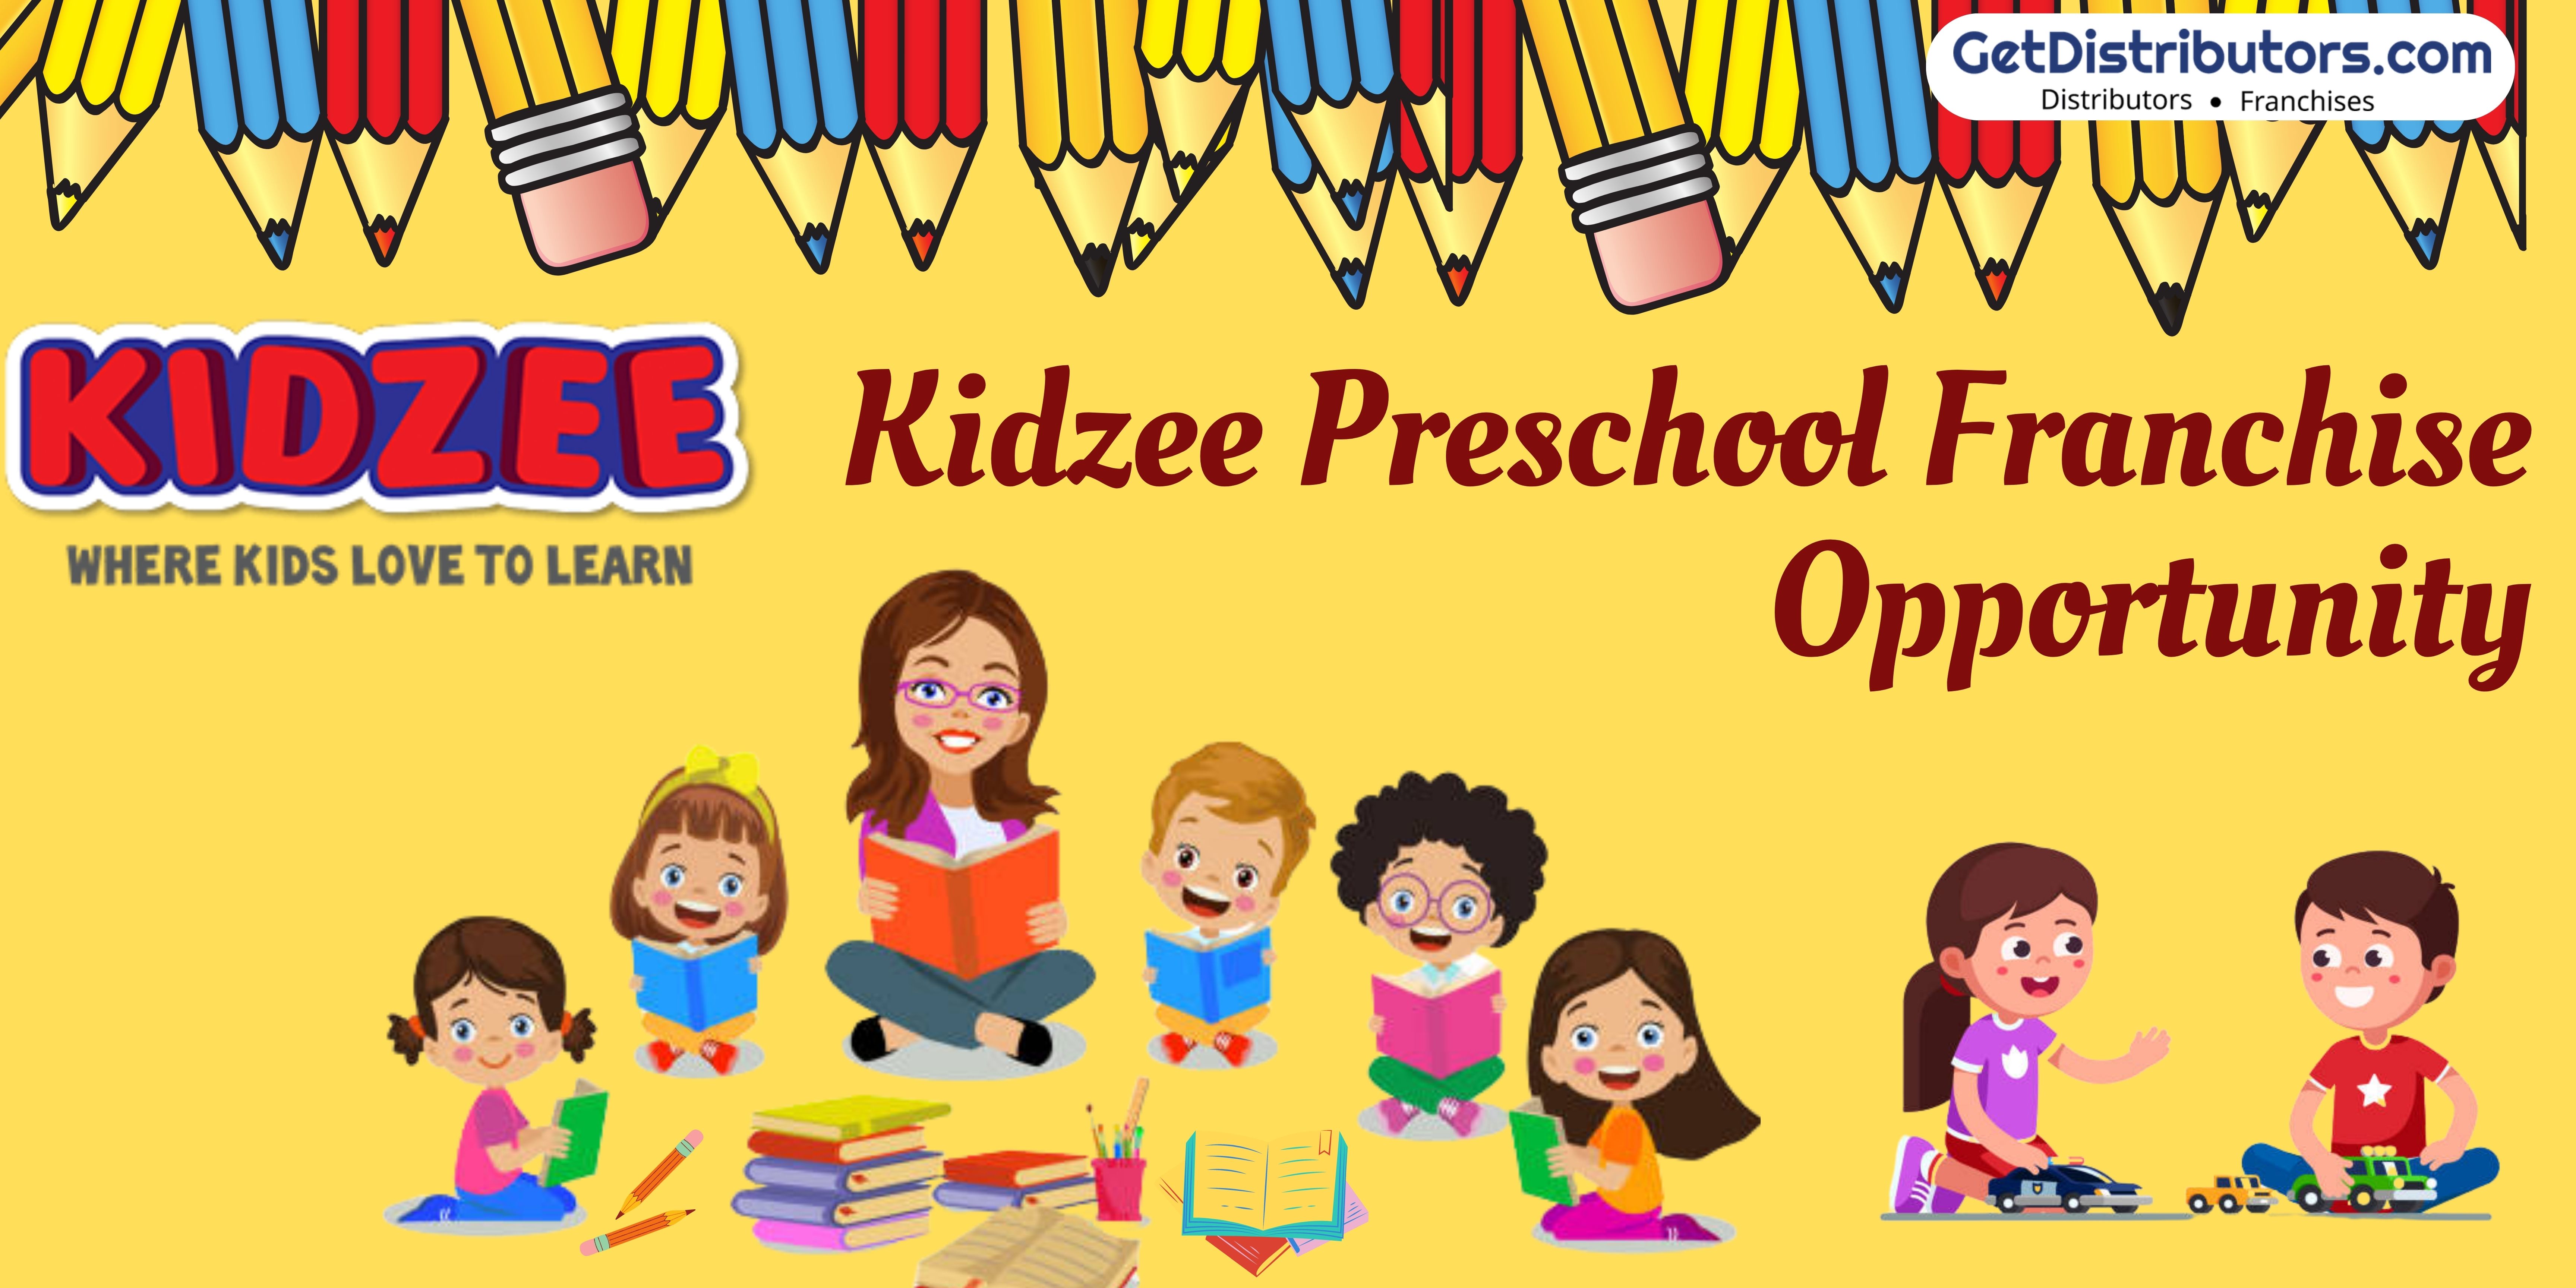 Kidzee Preschool Franchise Opportunity